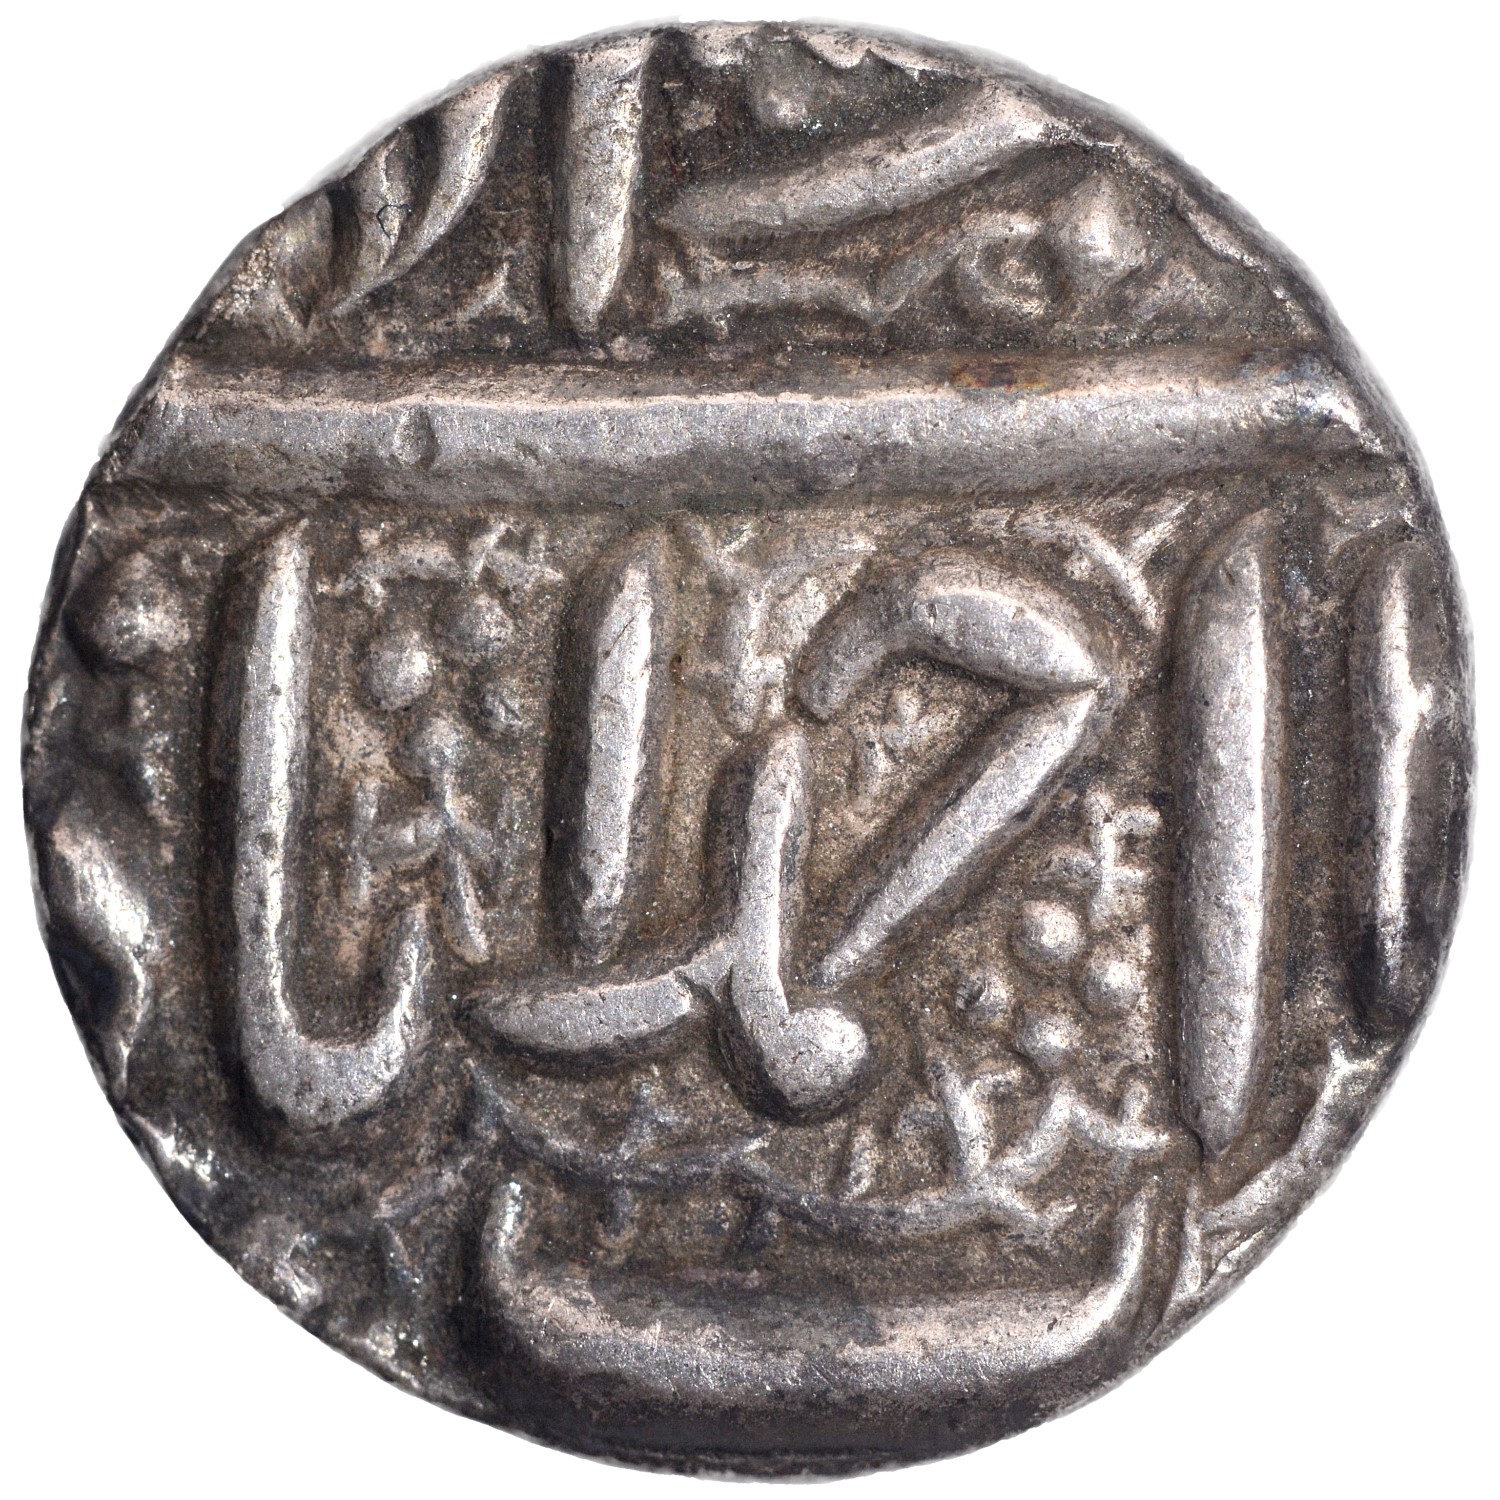 Akbar, Ahmadabad Mint, Silver Rupee, Month Tir, Obv: jalla jalalahu allahu akbar, Rev: persian